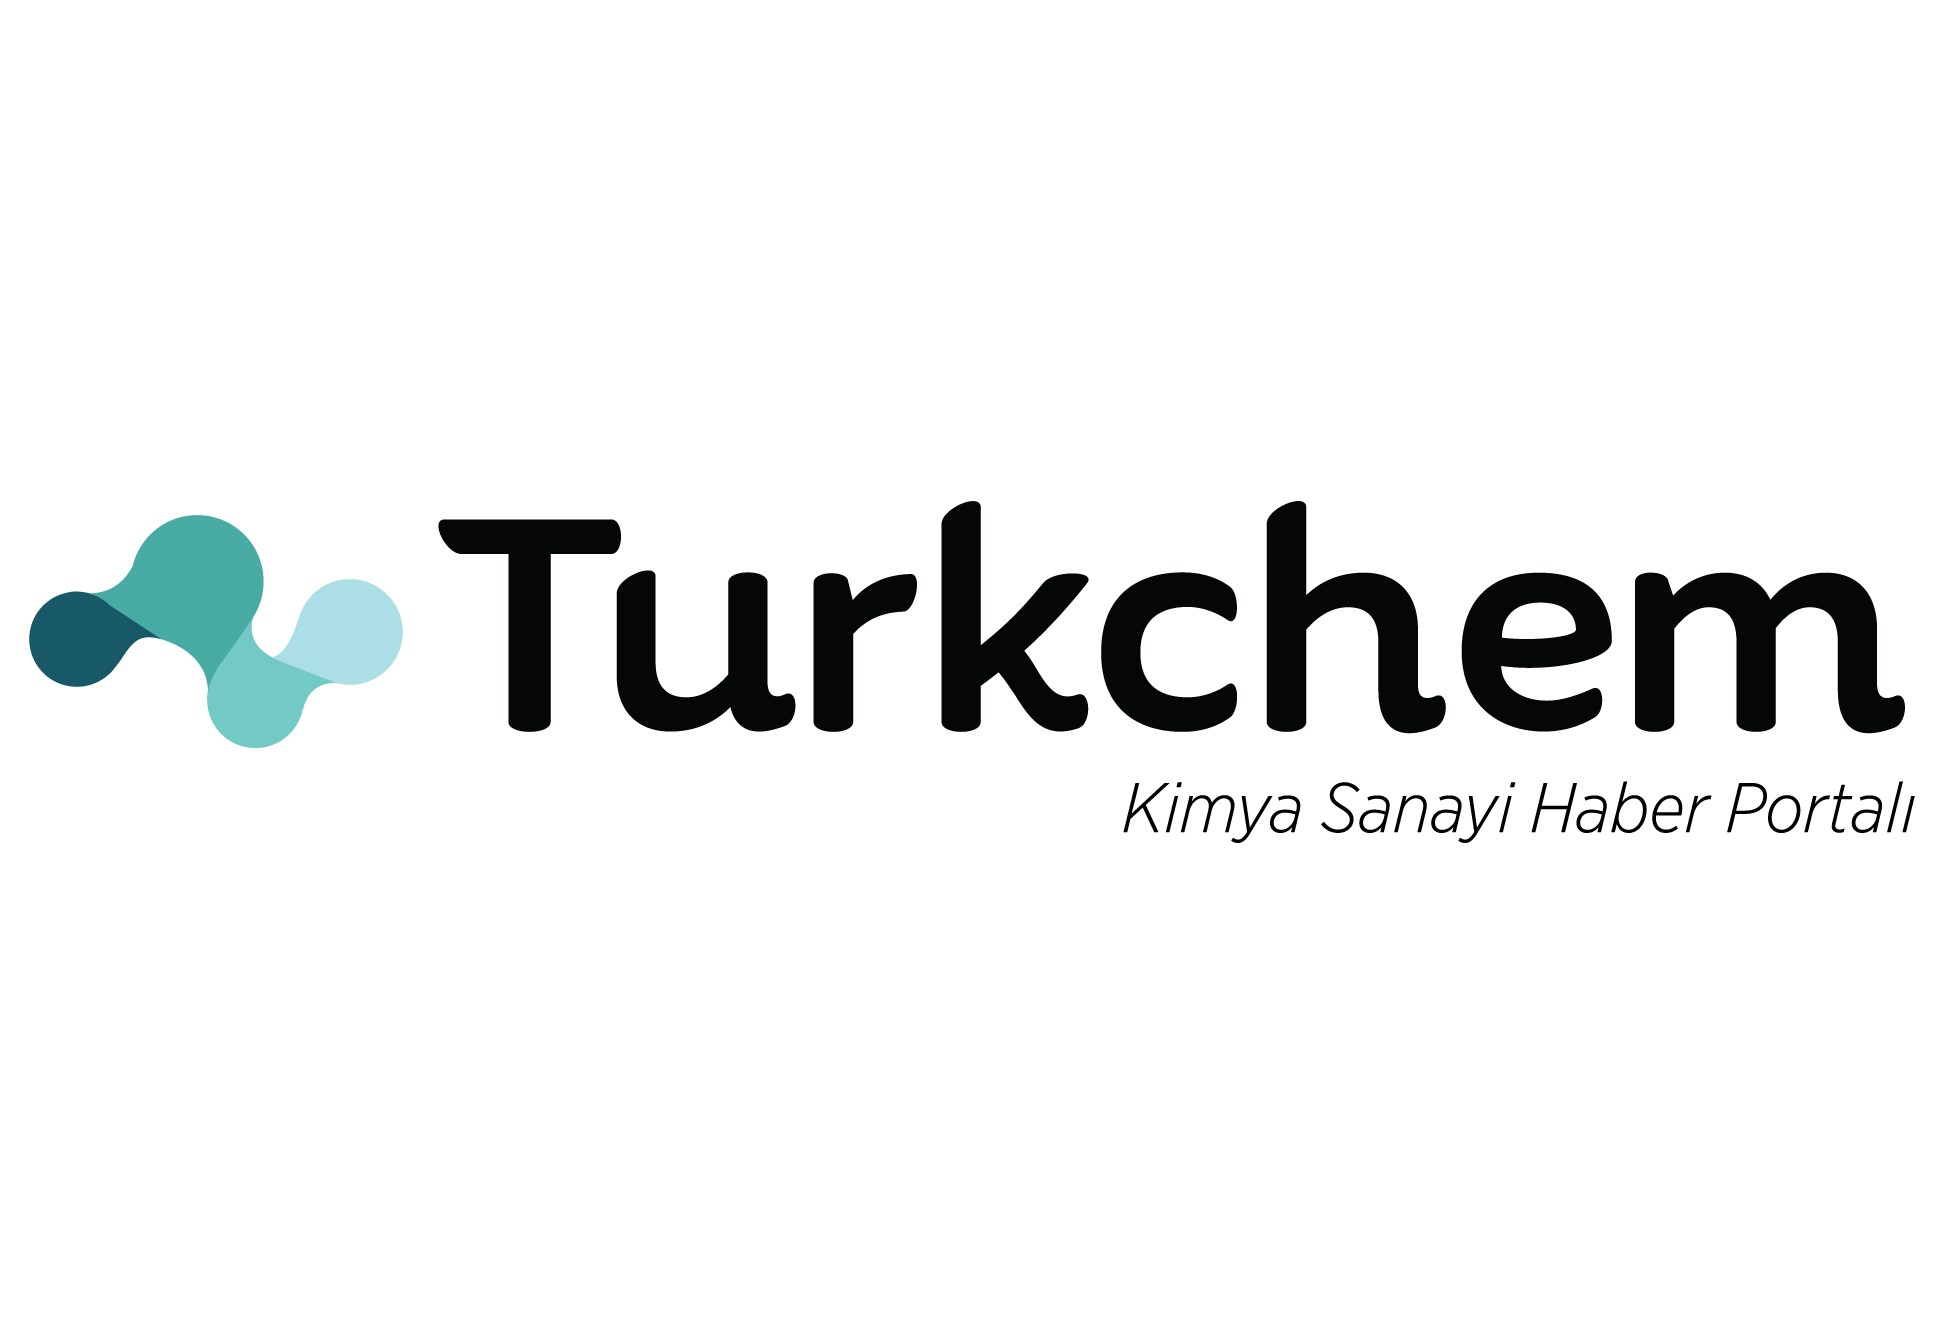 Turkchem.net